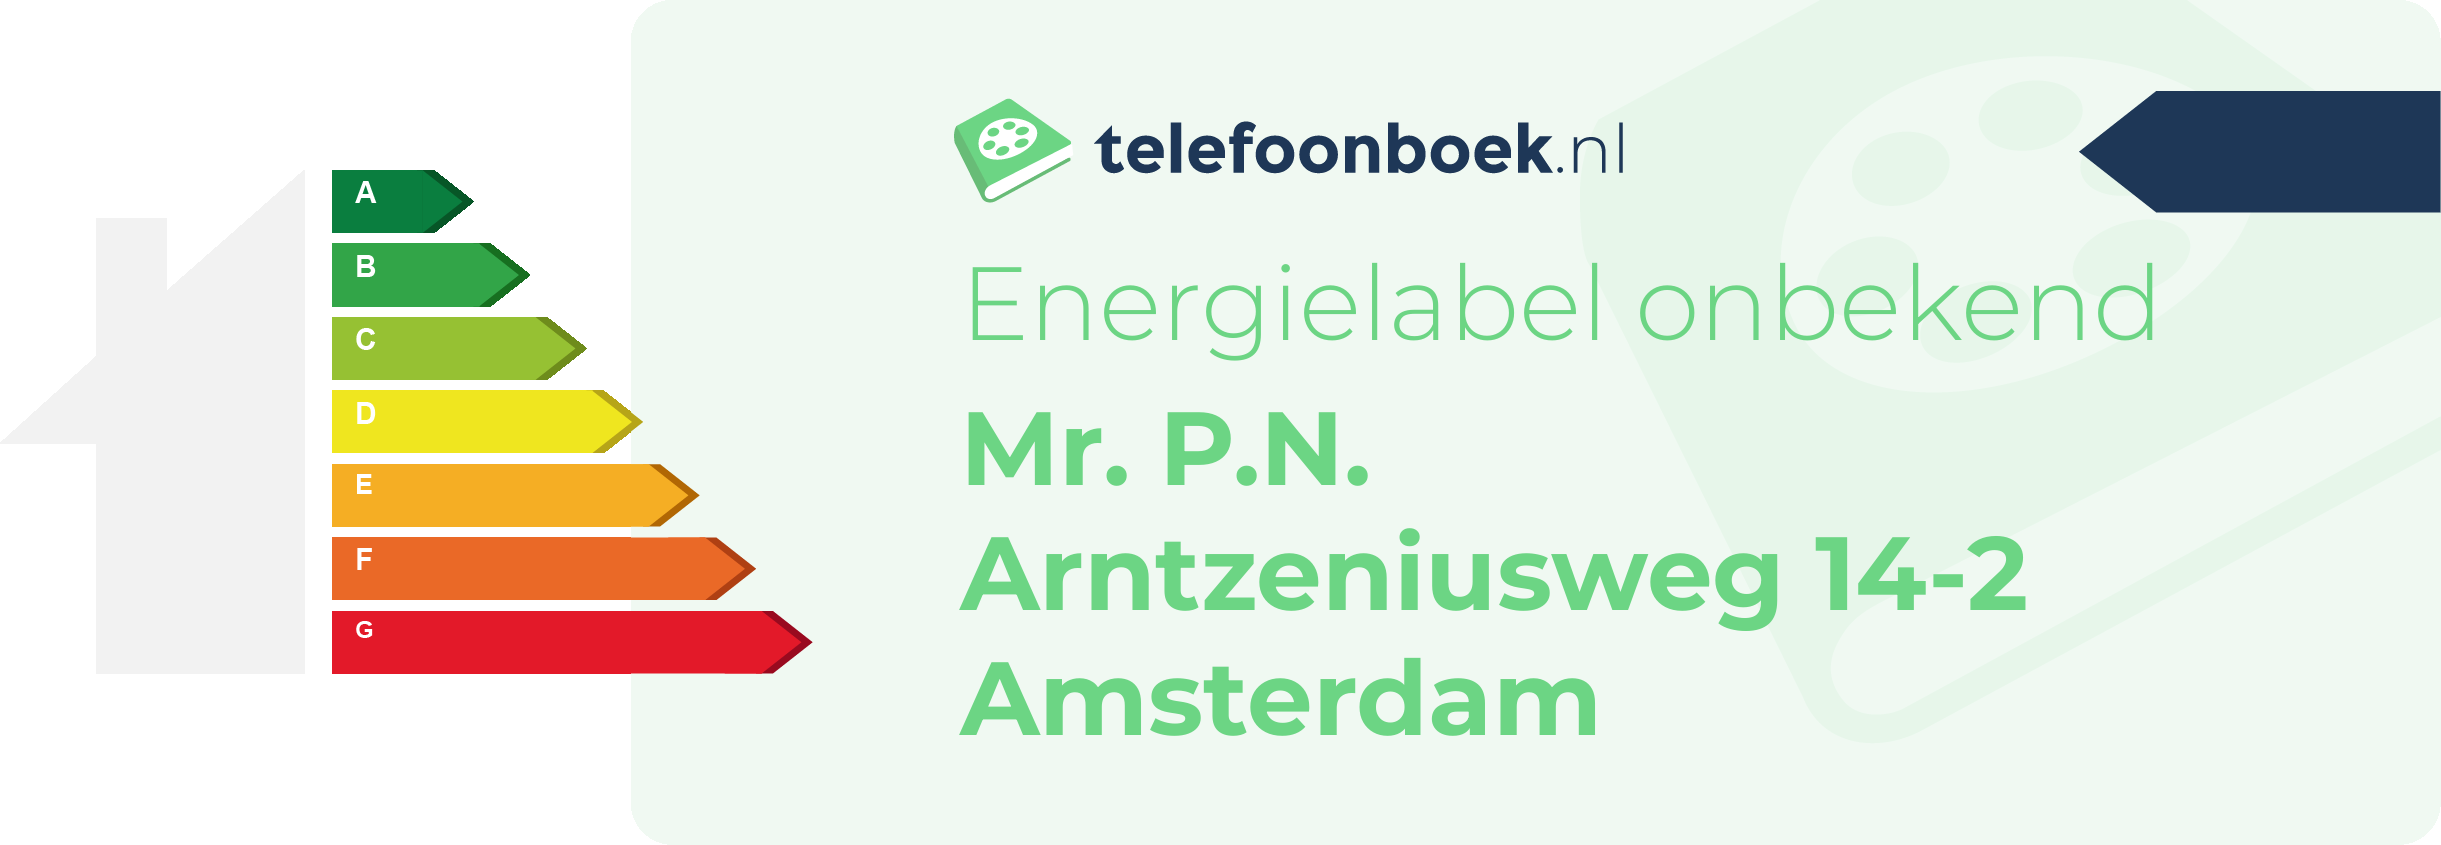 Energielabel Mr. P.N. Arntzeniusweg 14-2 Amsterdam